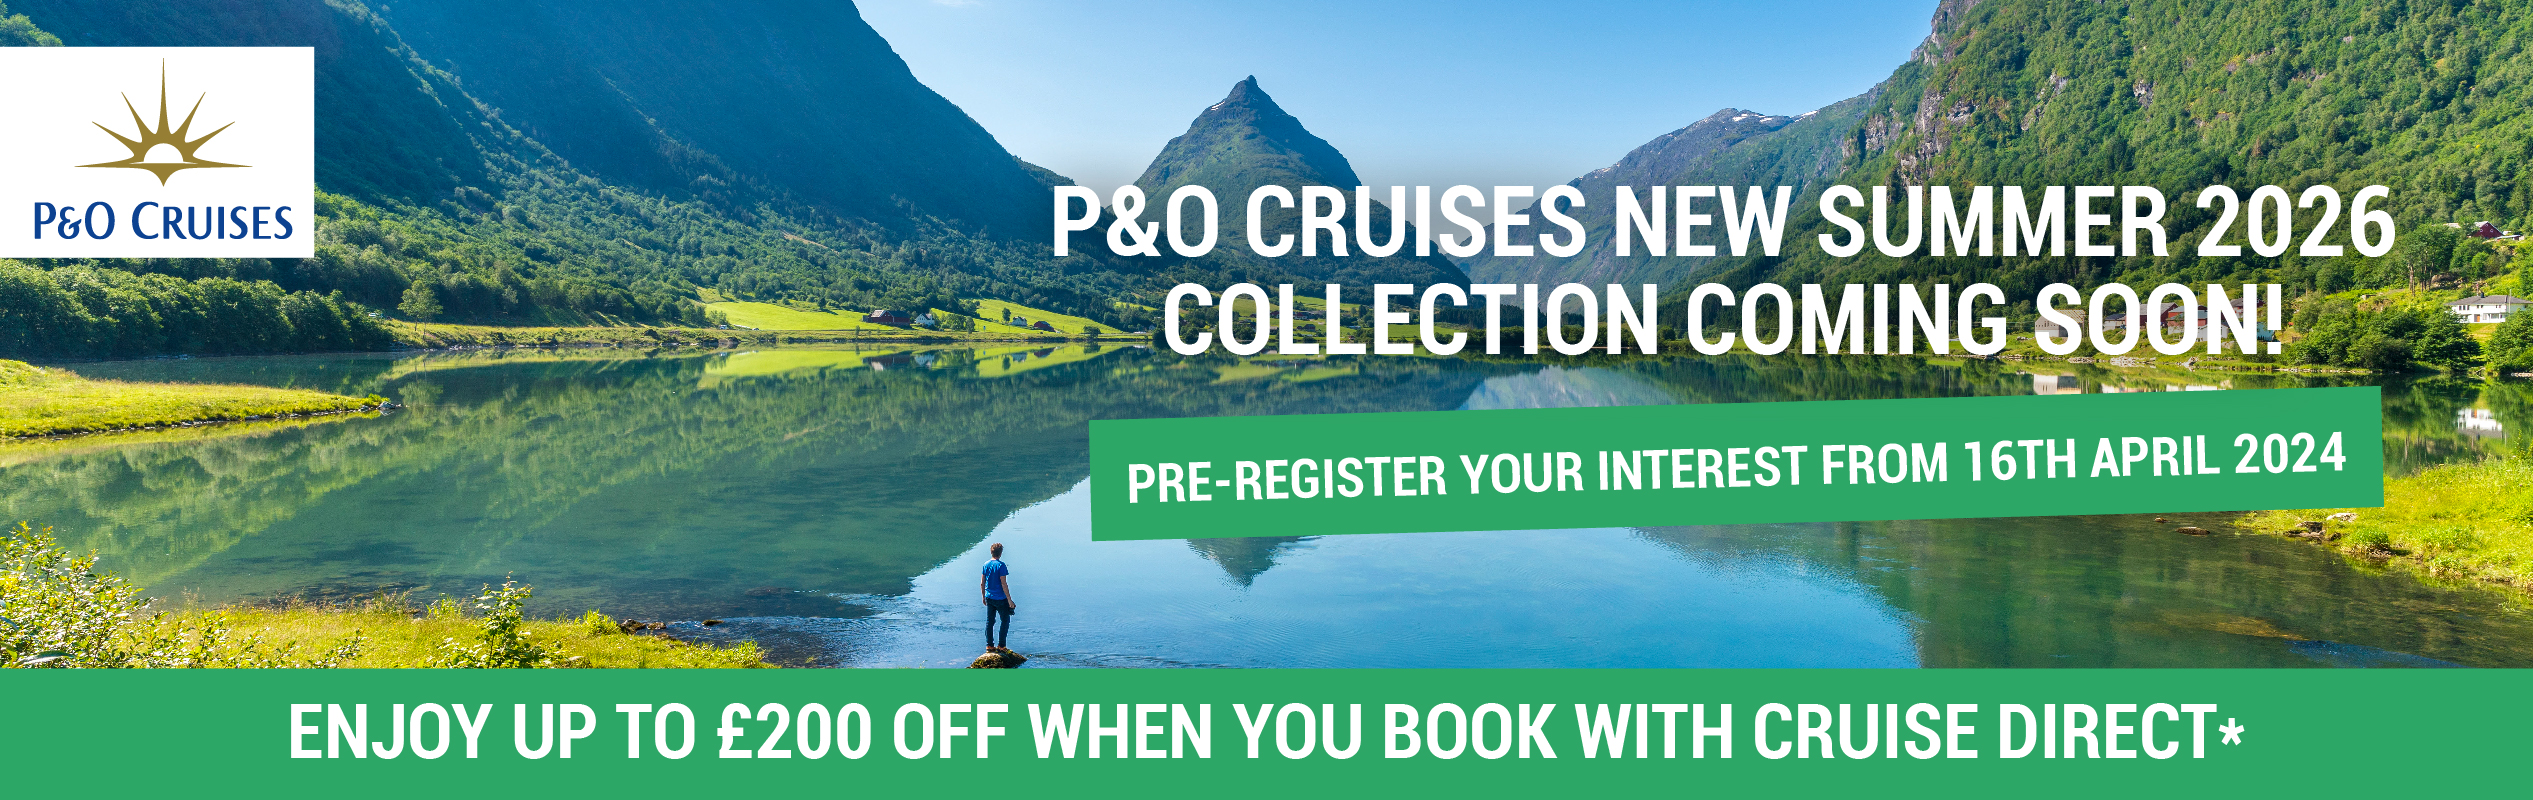 P&O Cruises Summer 2026 Holidays